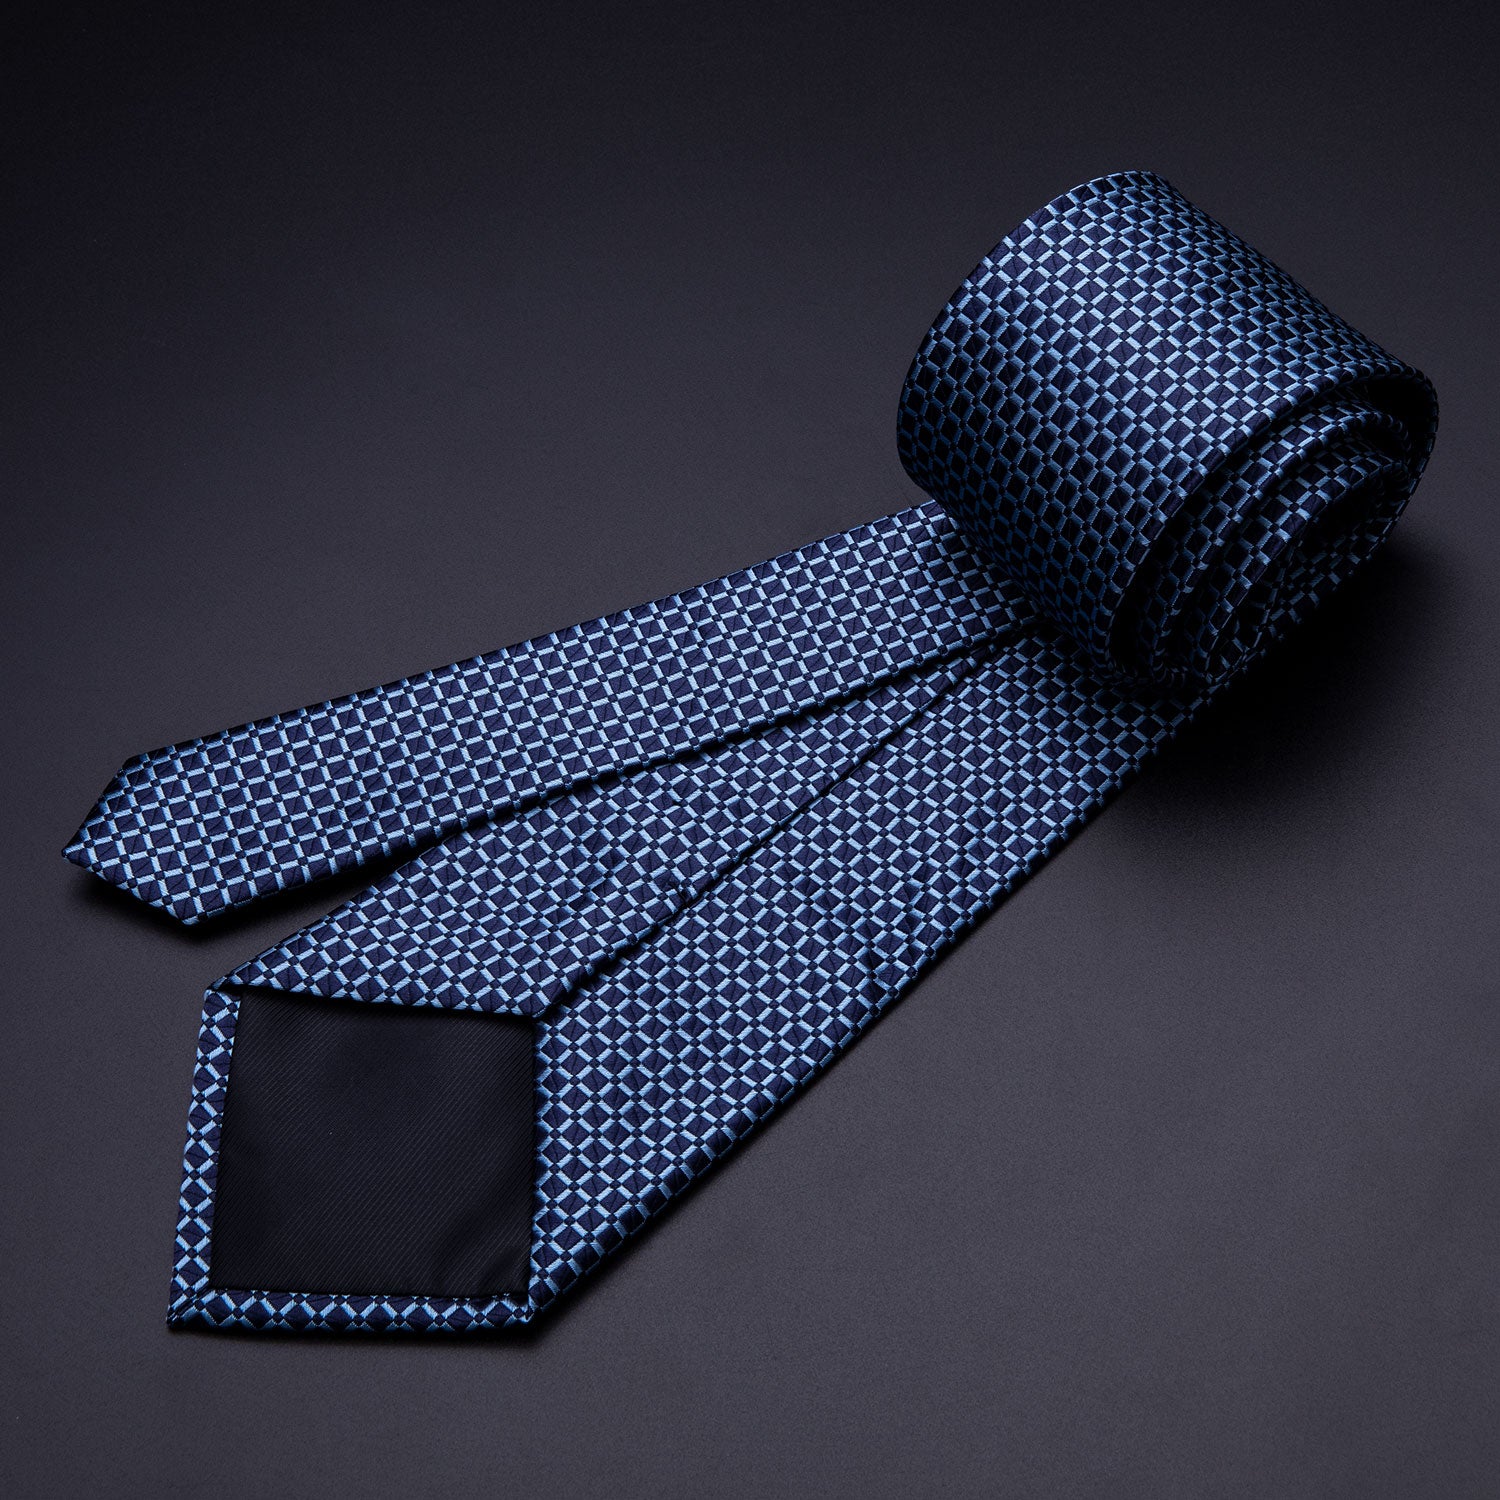 Dark Blue Plaid Tie Pocket Square Cufflinks Set